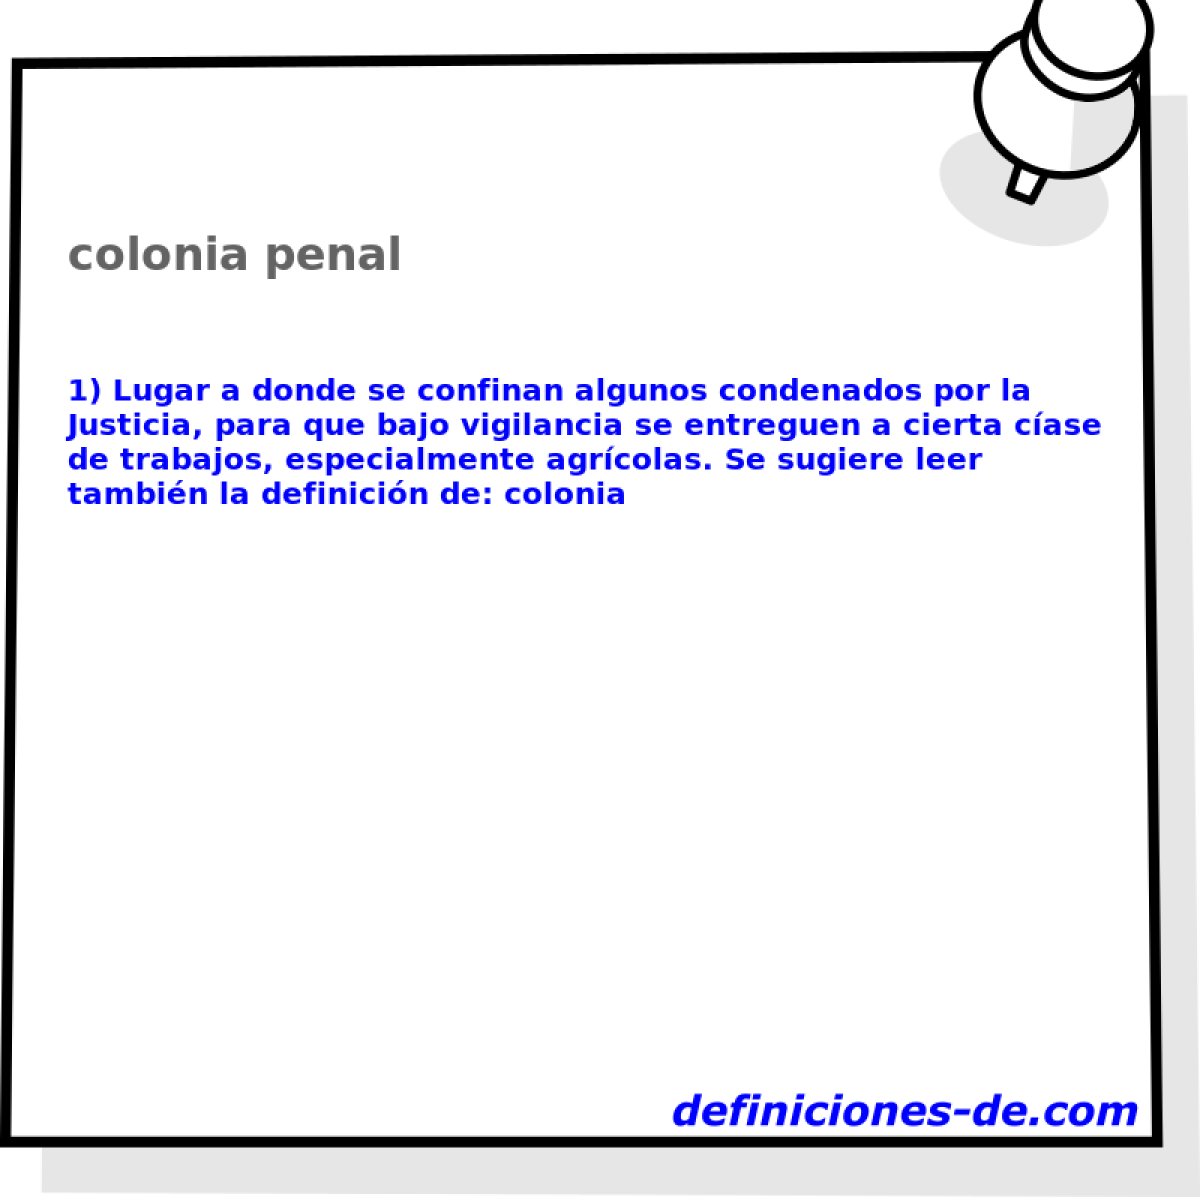 colonia penal 